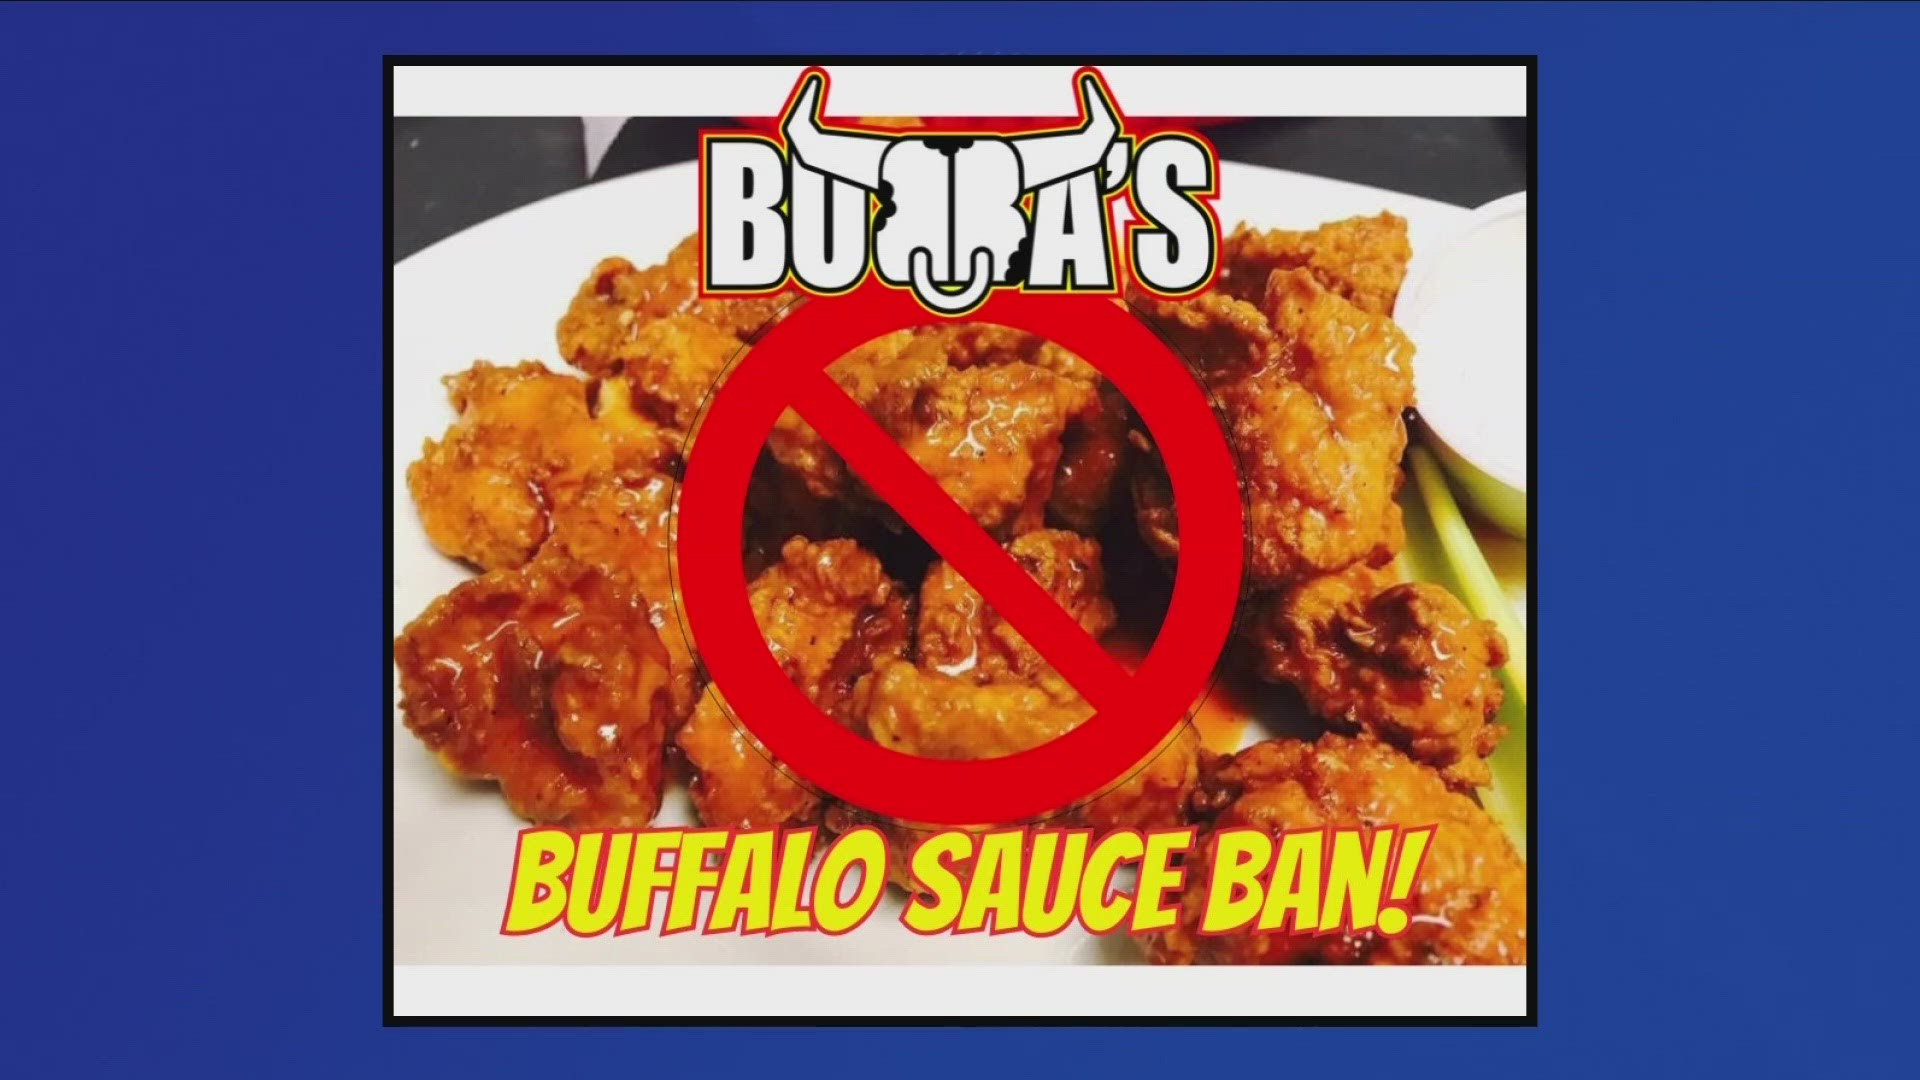 The Pittsburgh restaurant banned Buffalo sauce.